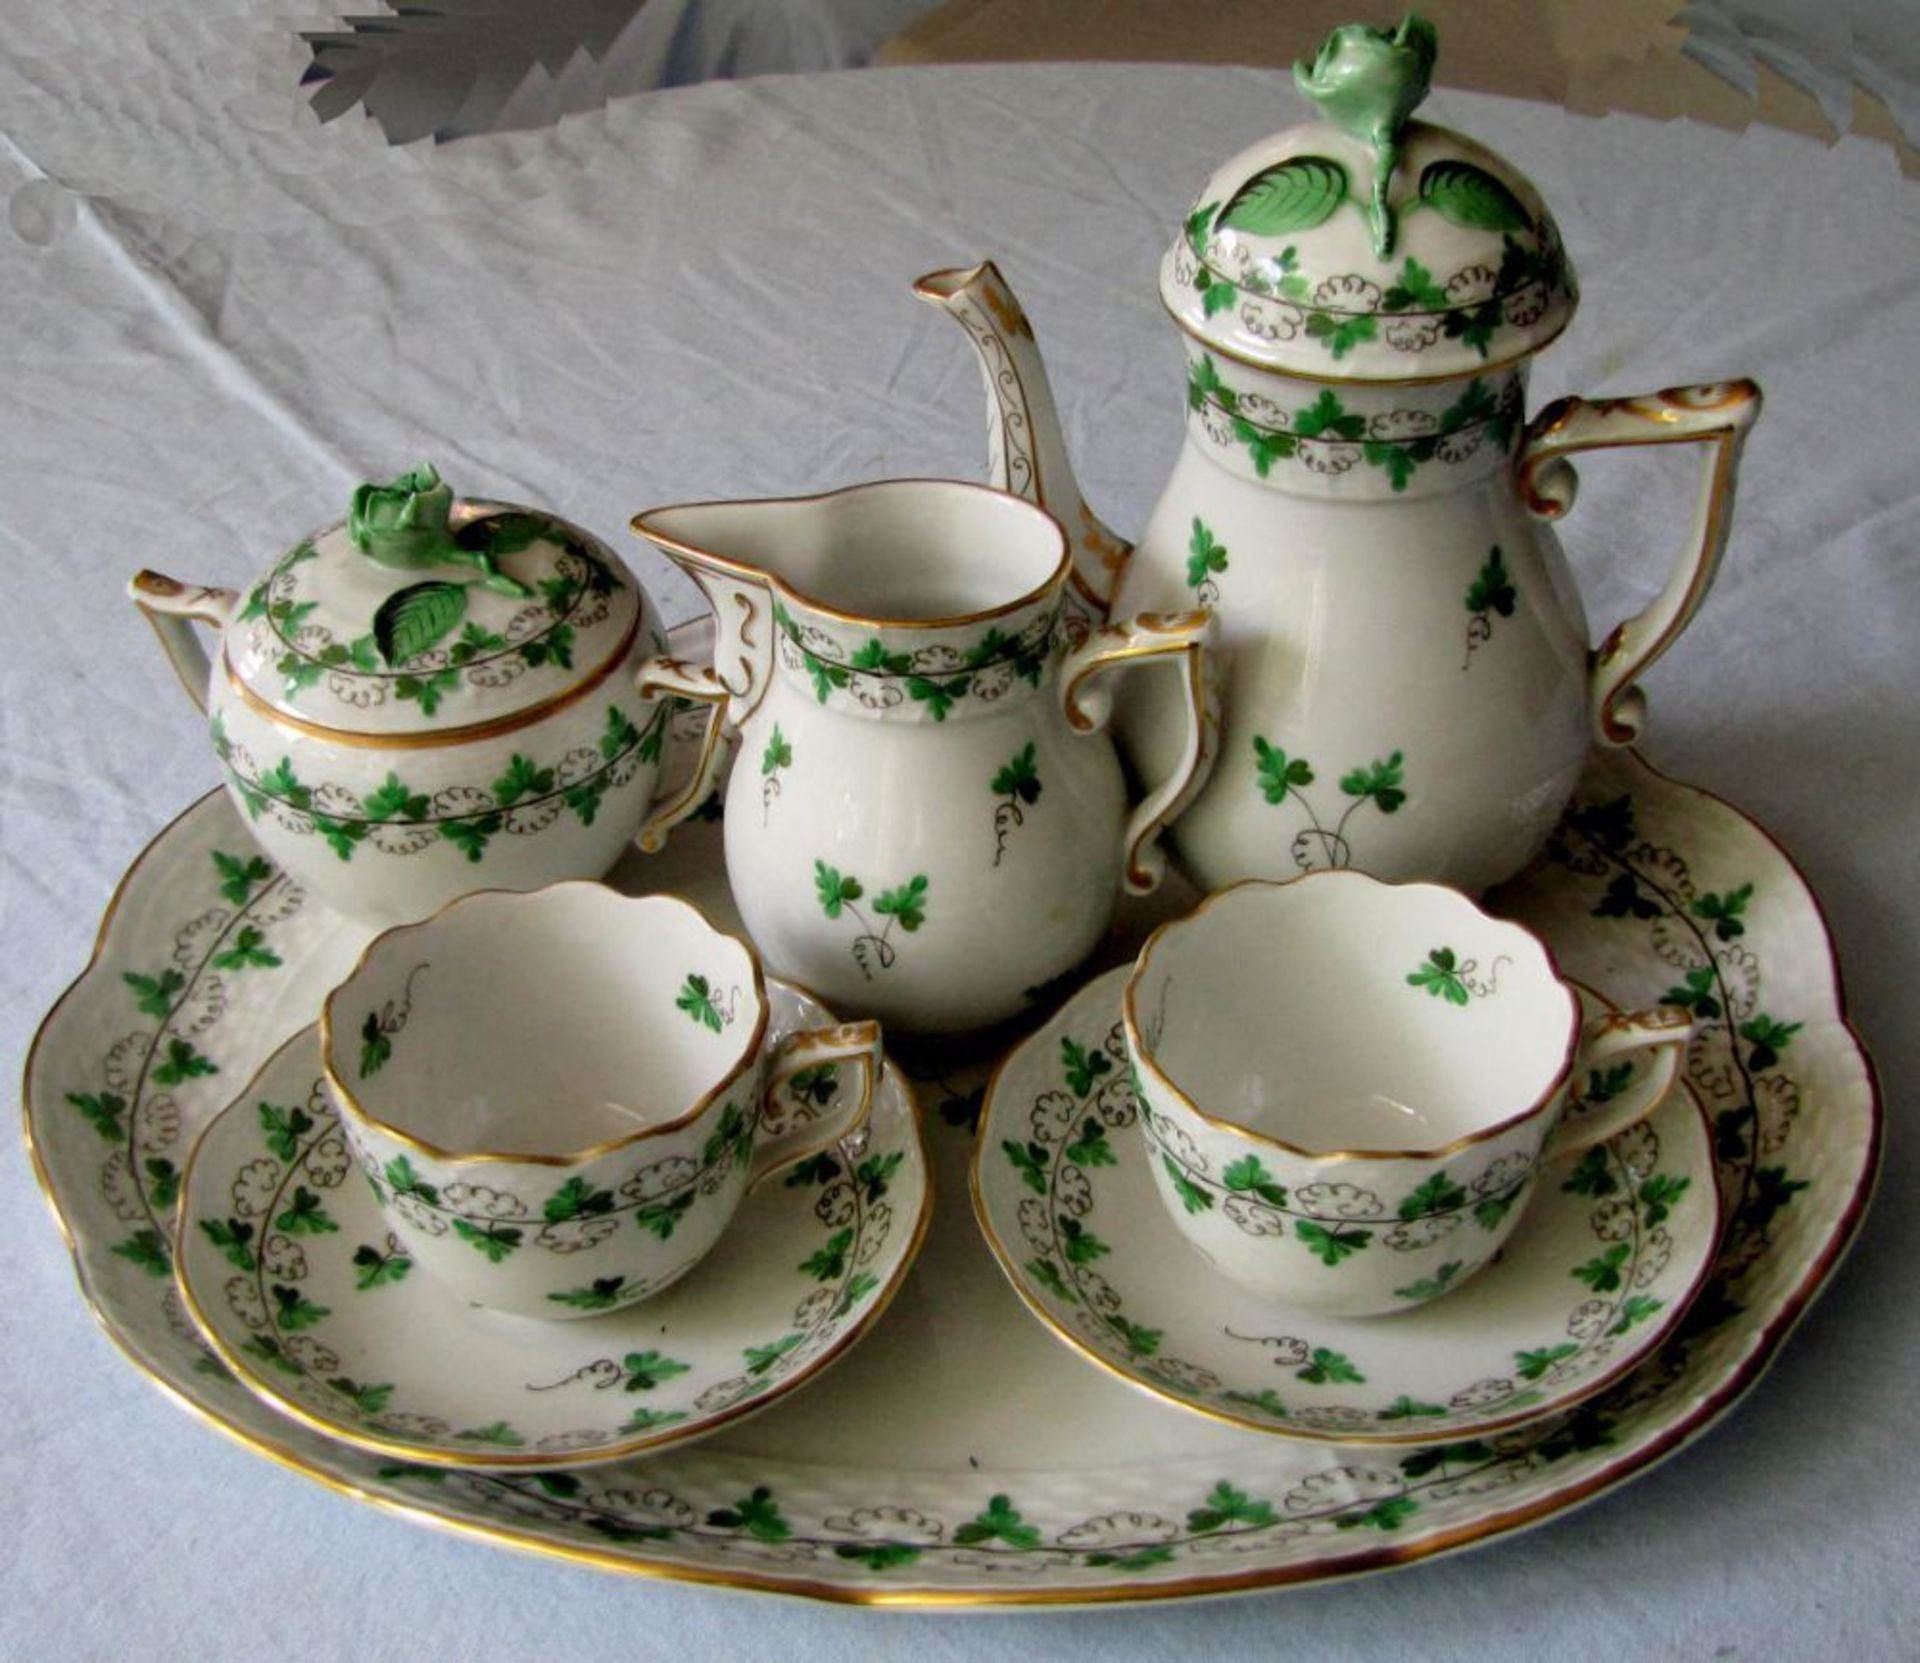 Tete-a-tete, Herend.  Comprising: two mocha cups, mocha pot, milk jug, sugar bowl and tray. This